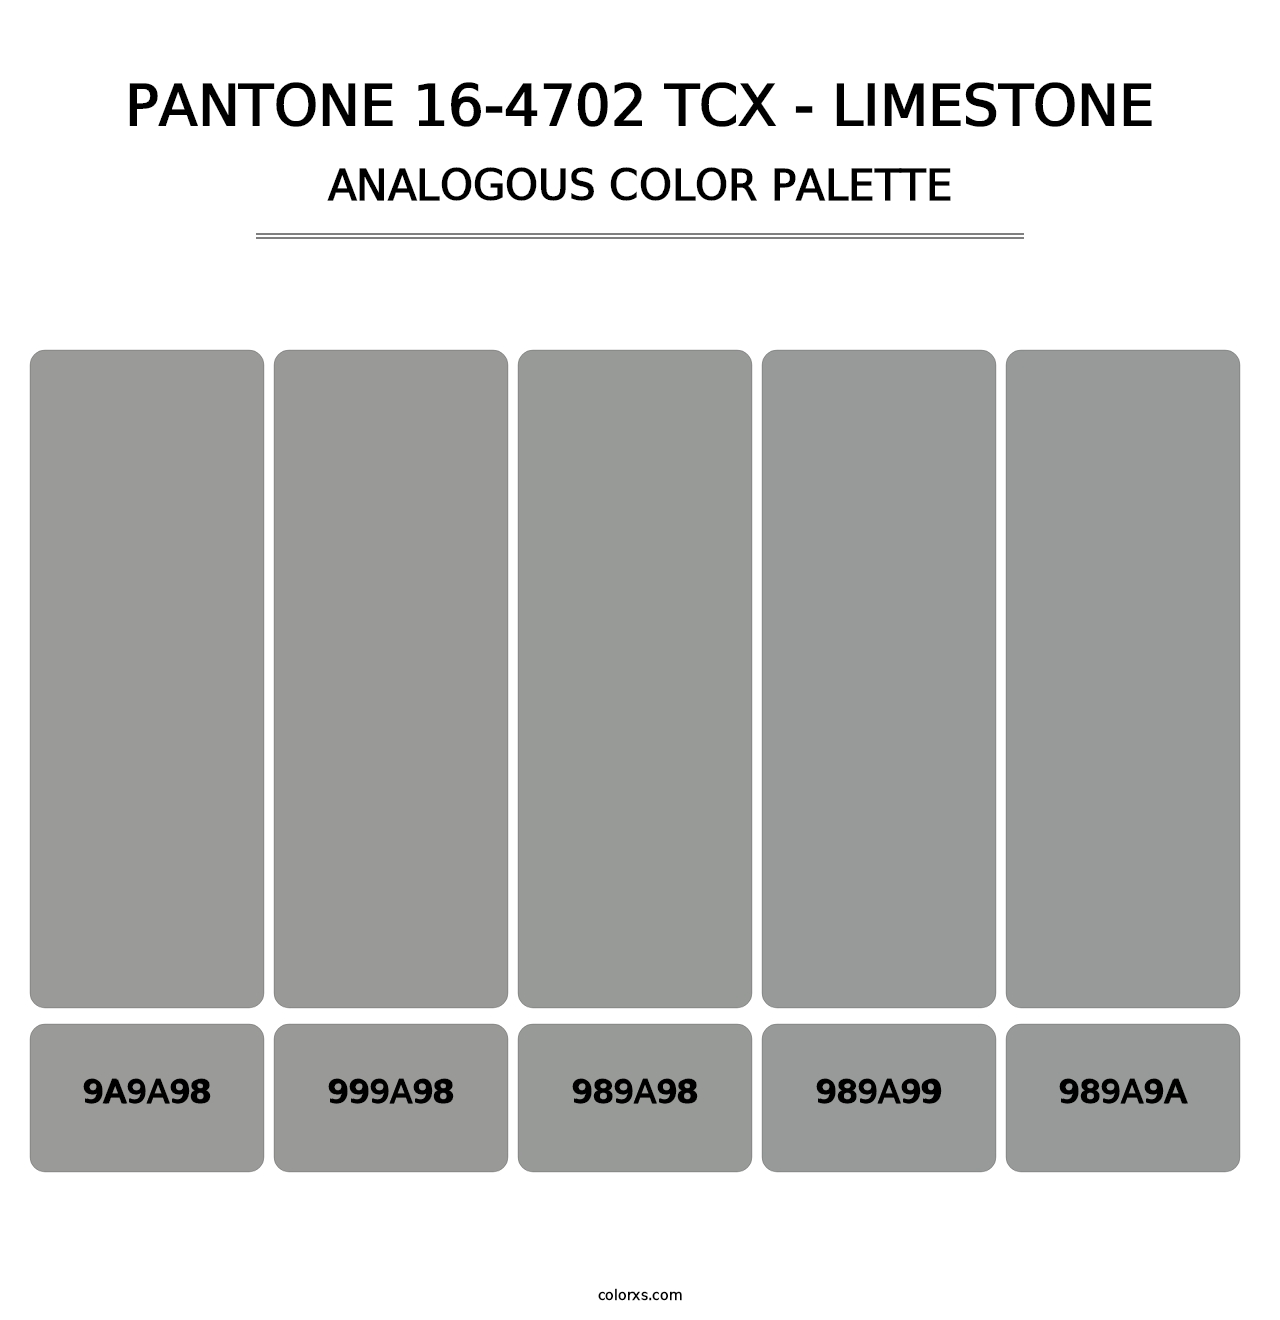 PANTONE 16-4702 TCX - Limestone - Analogous Color Palette